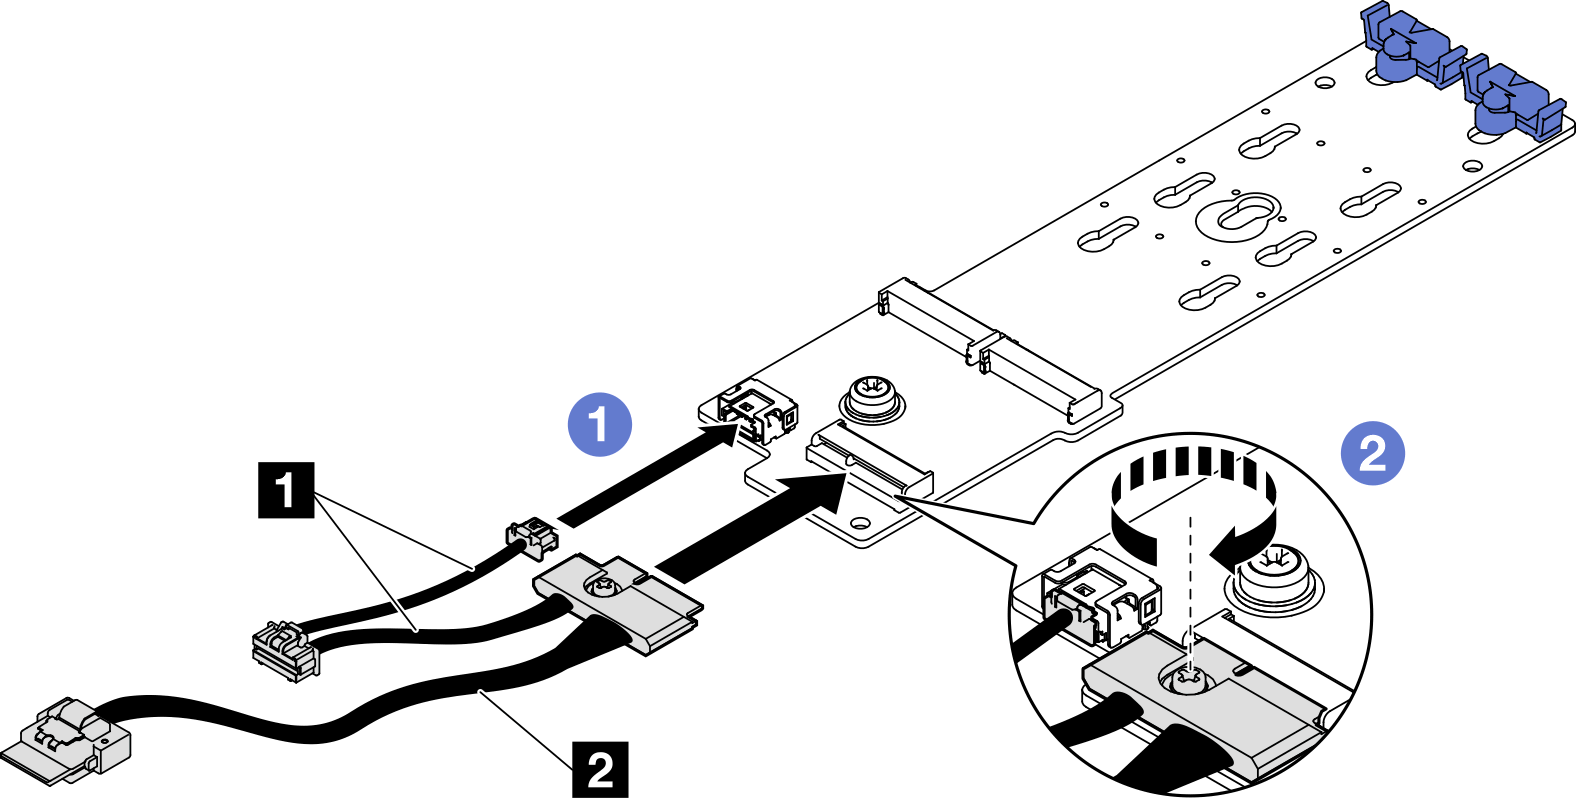 SATA/NVMe or NVMe RAID M.2 backplane cable connection